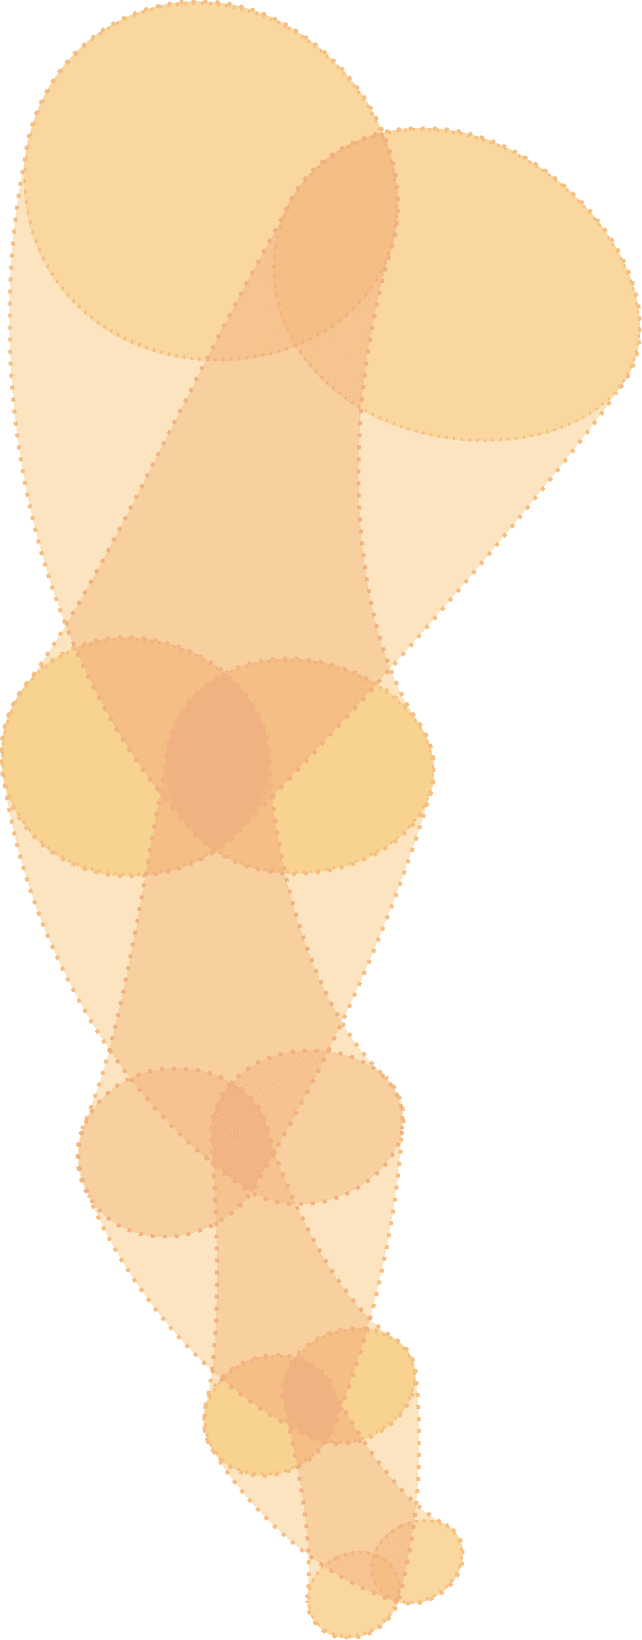 Orange geometric figure